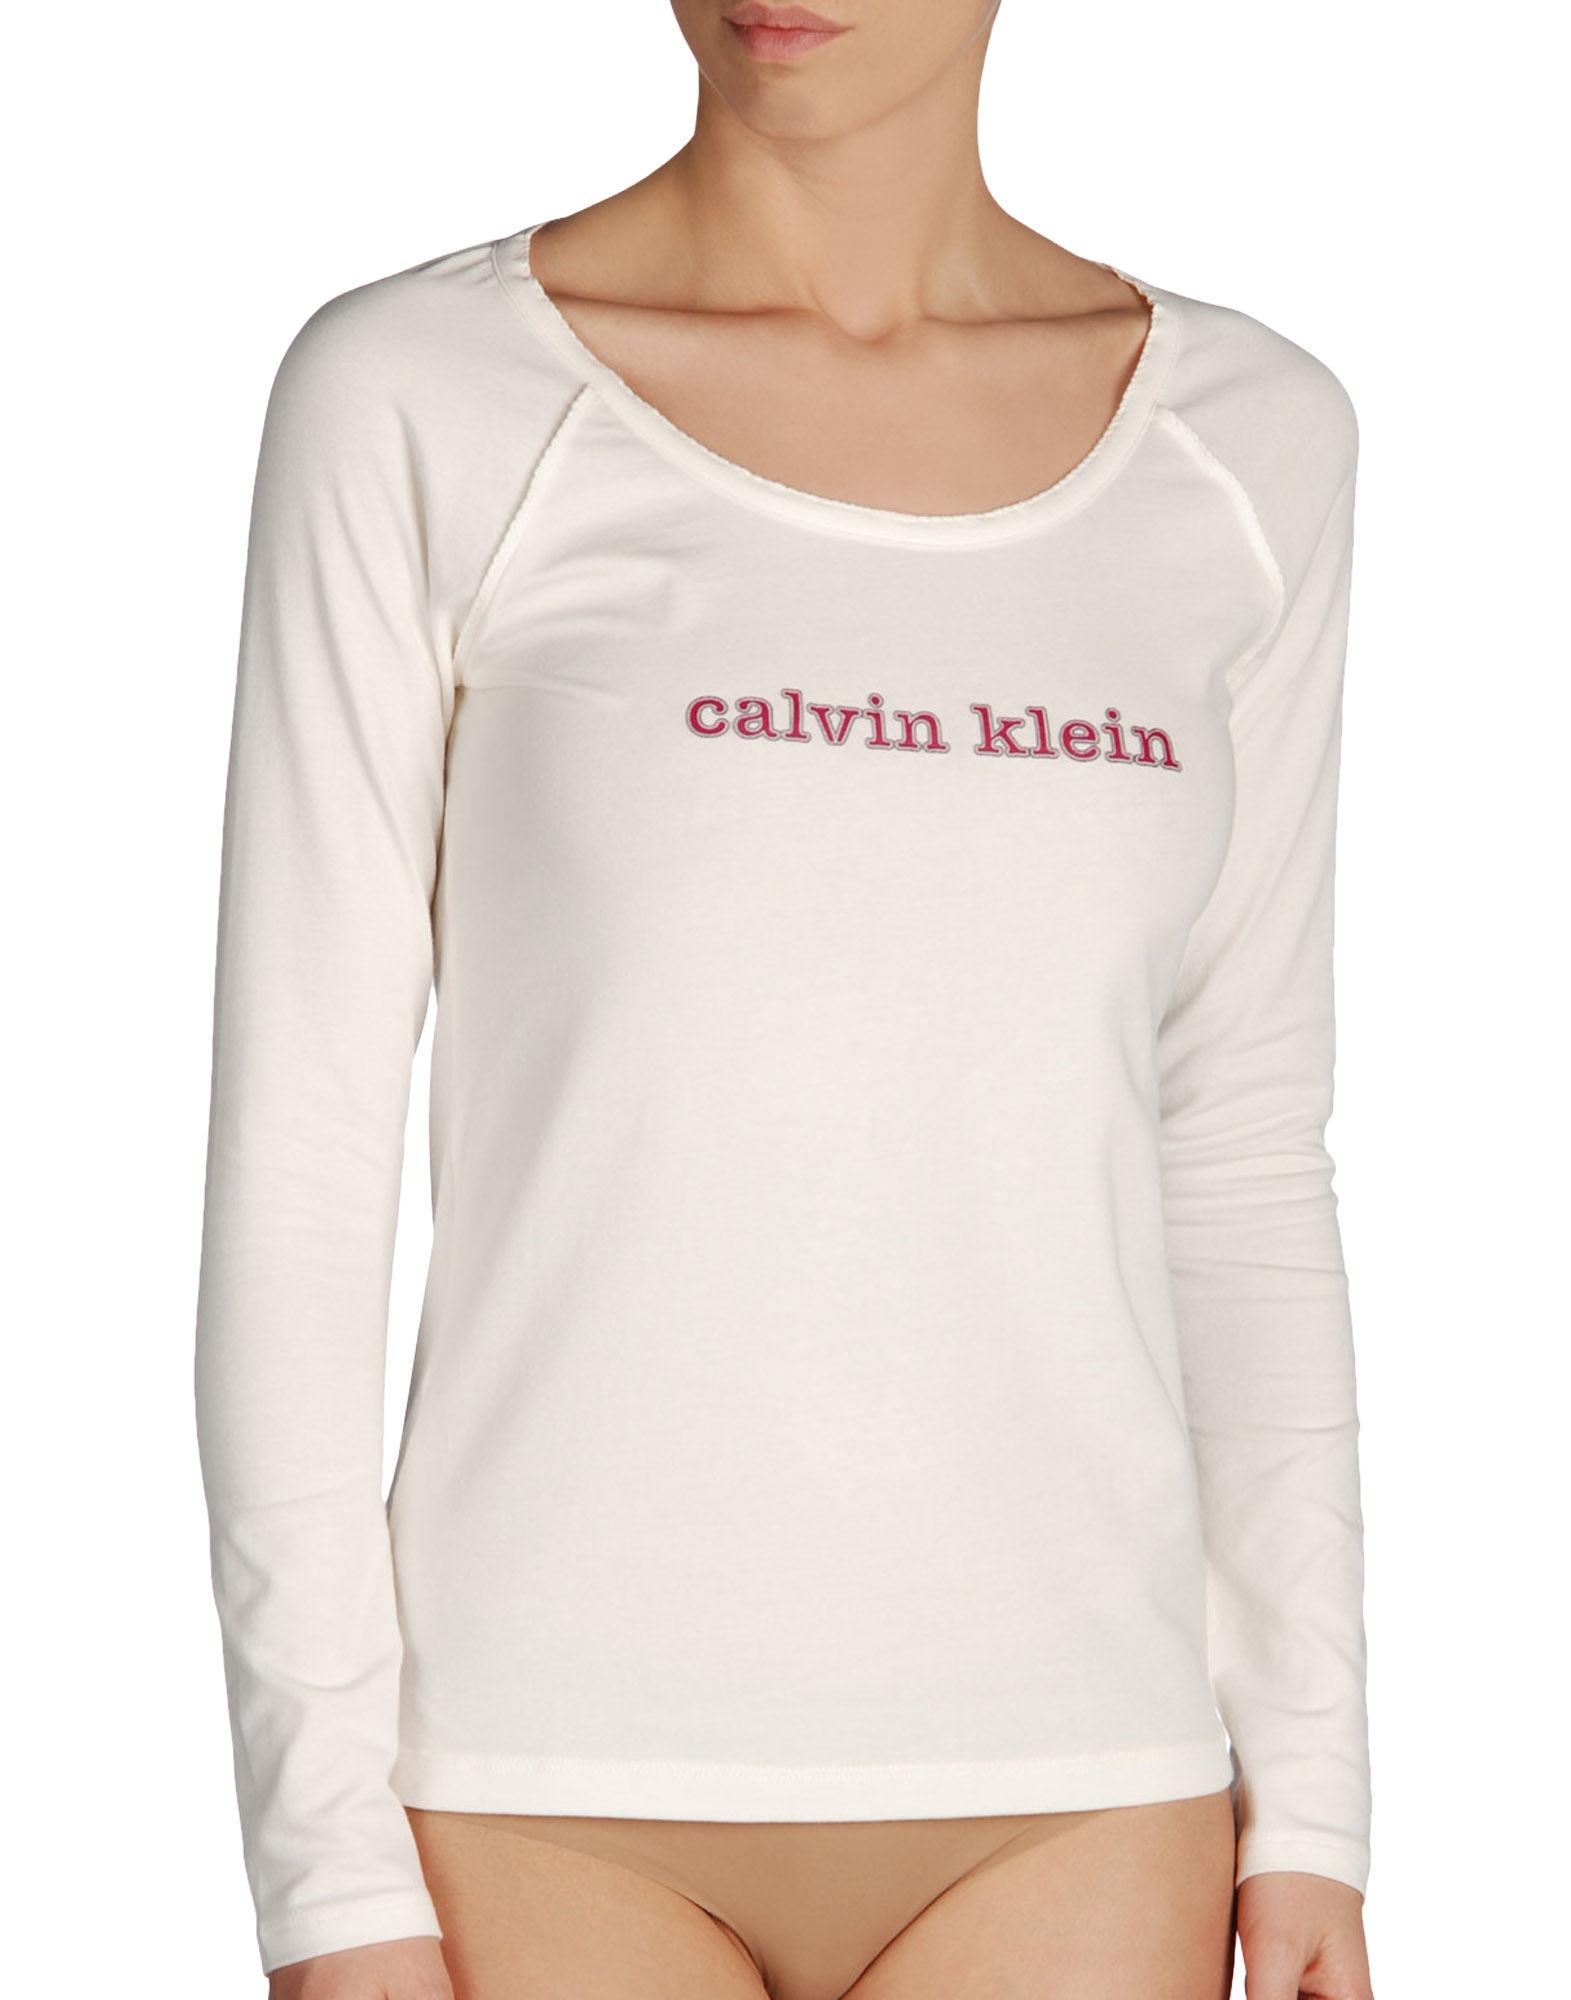 Foto calvin klein sleepwear camisetas interiores
